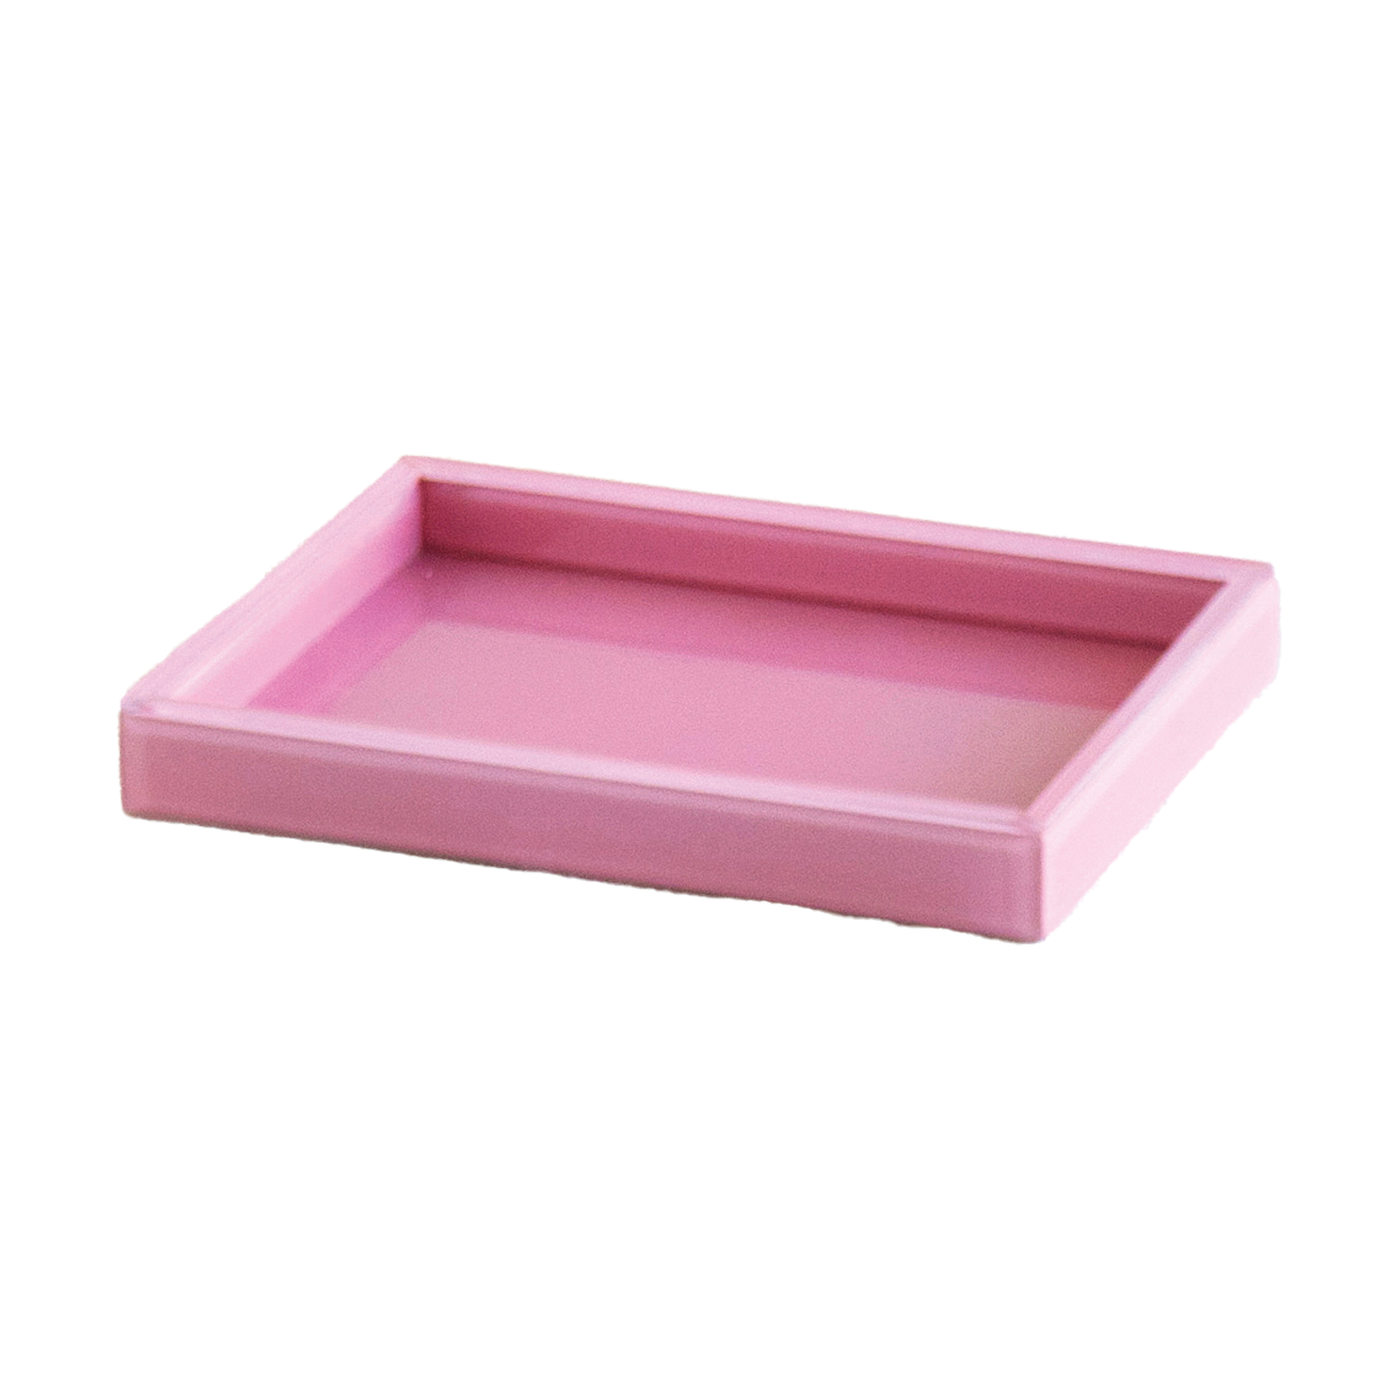 Glass Tray - Light Pink